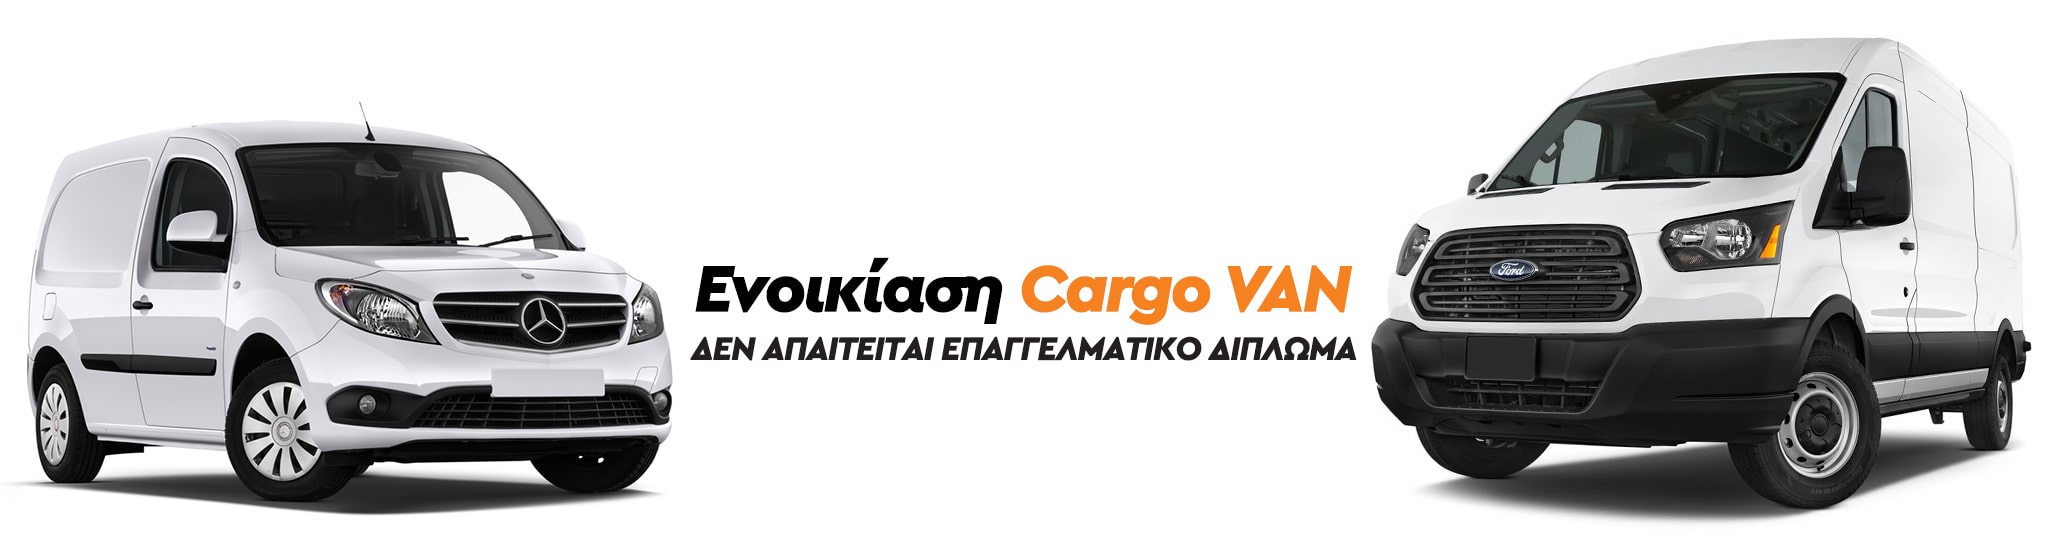 Theocar.com - Ενοικίαση CargoVAN-min